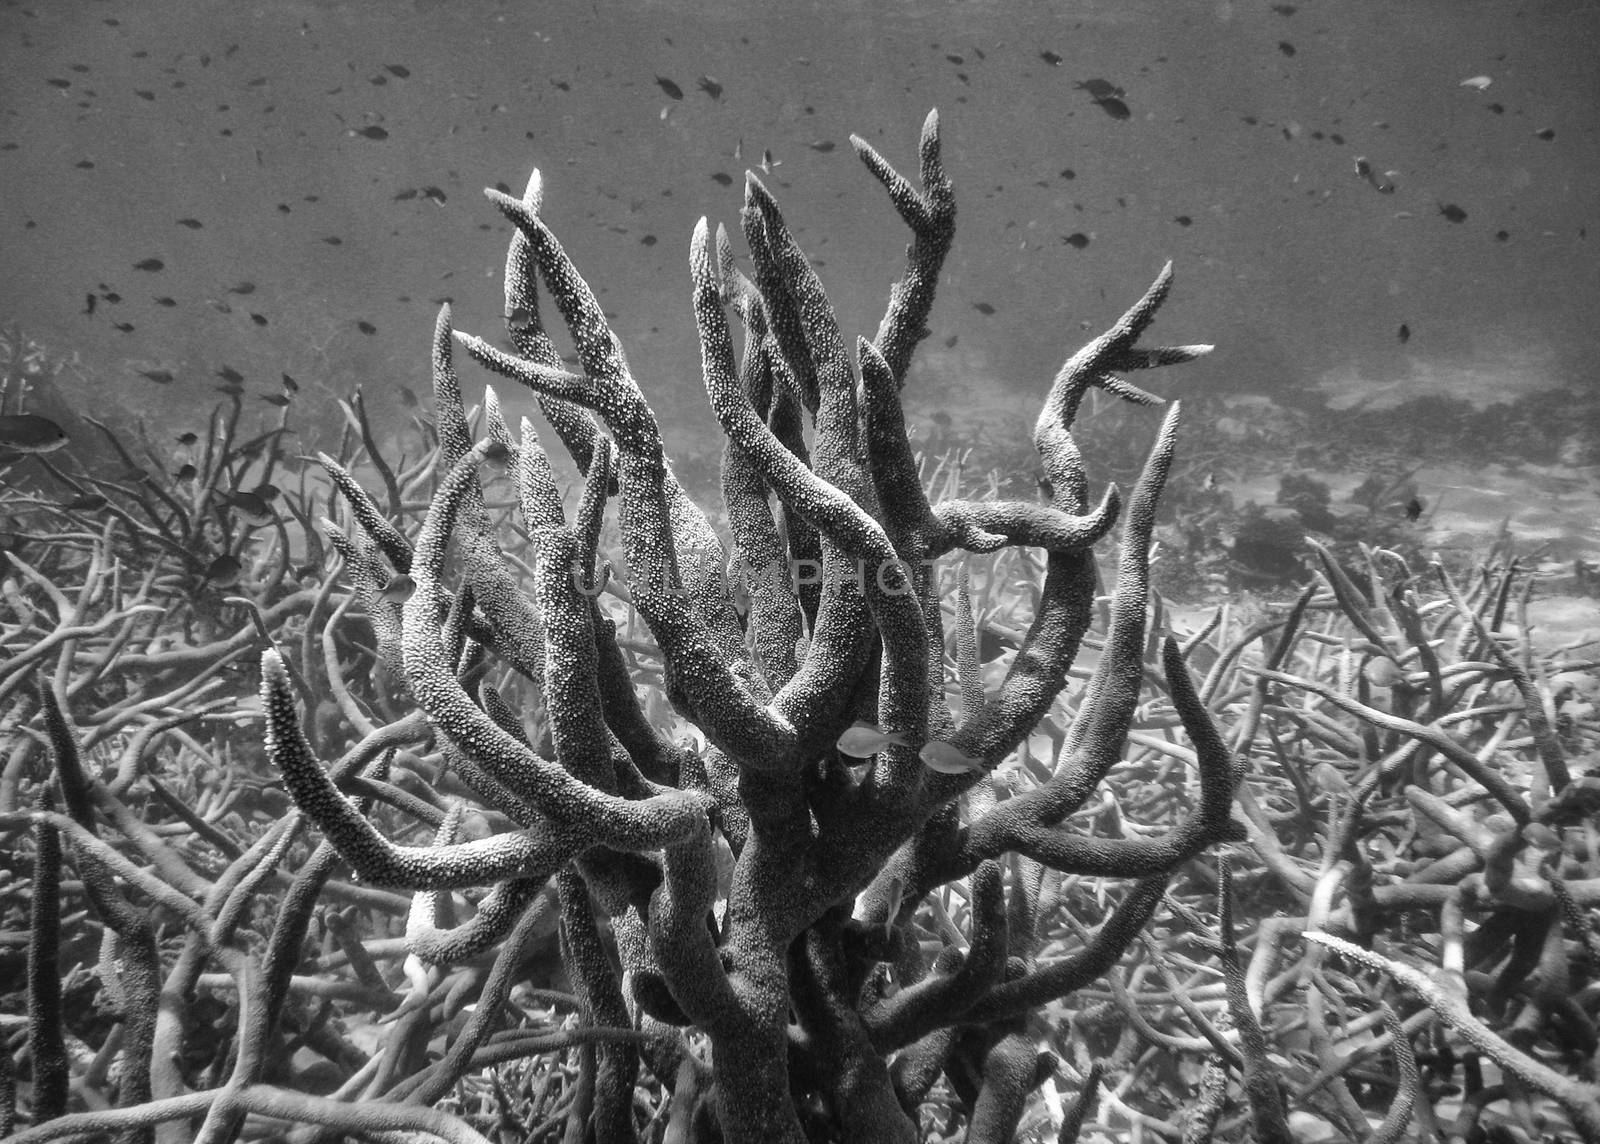 Coral formations in Queensland Ocean - Australian Coral Reef by jovannig